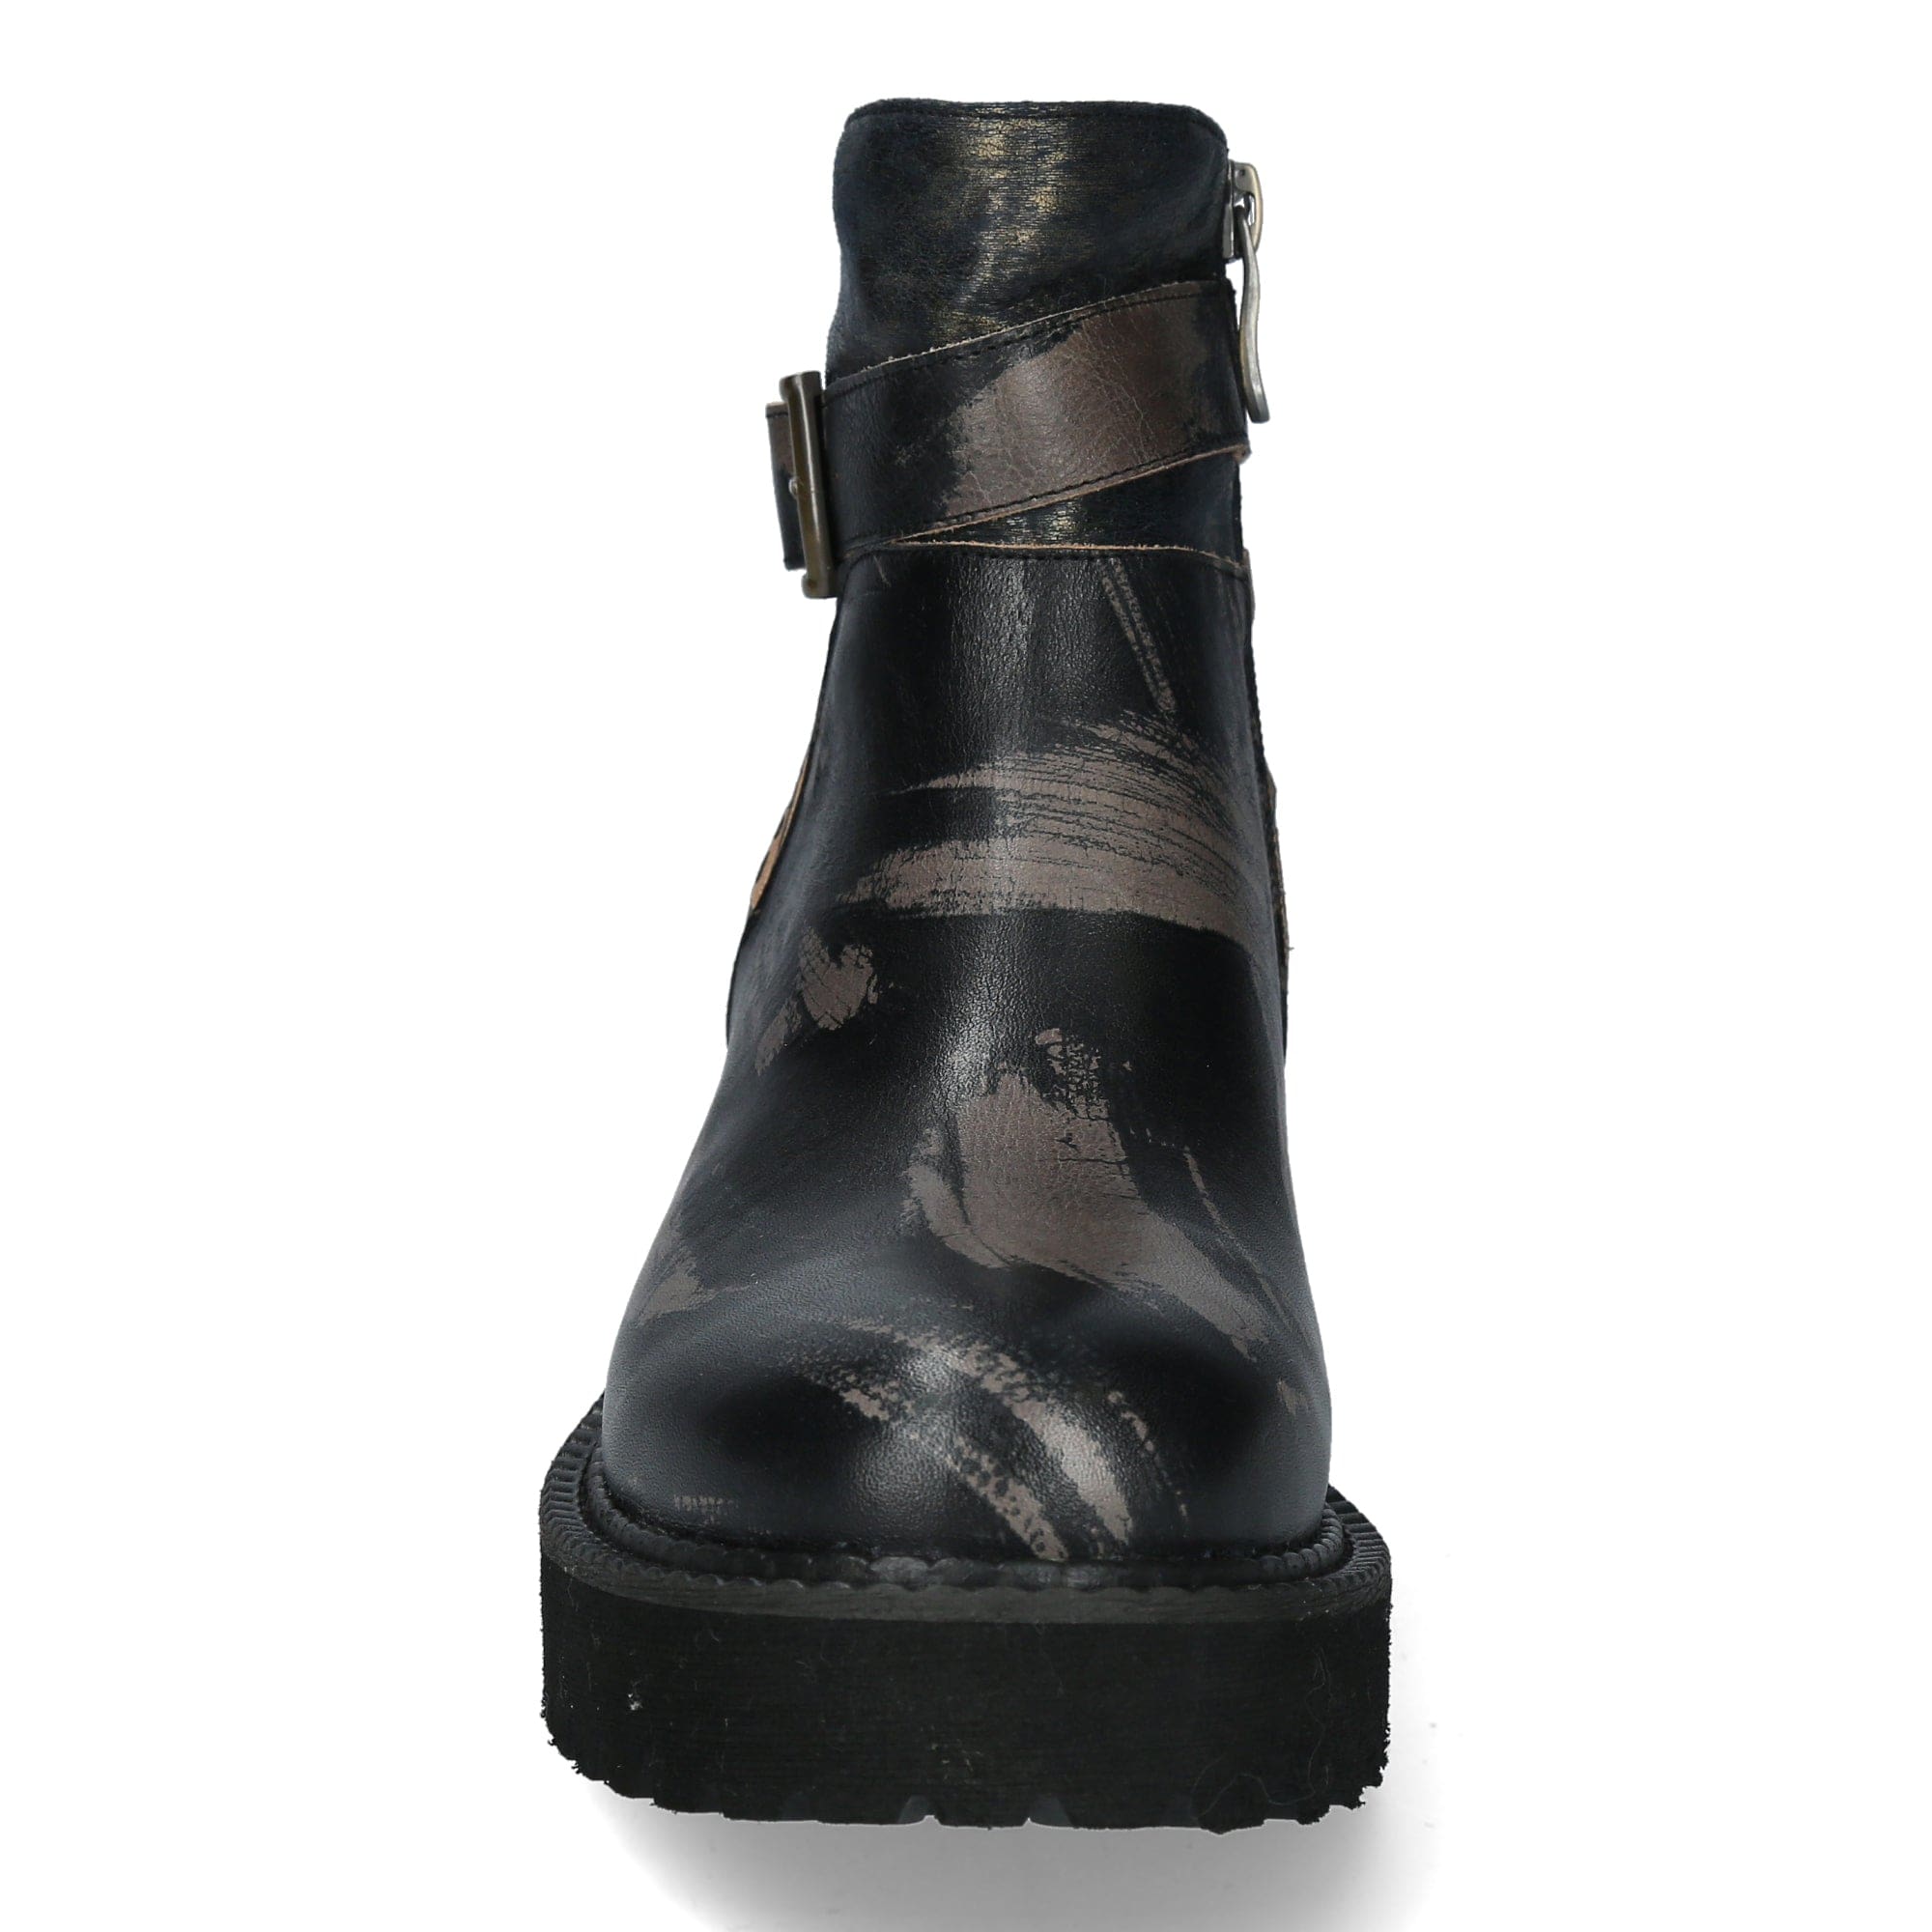 Chaussure KEAO 04 - Boots